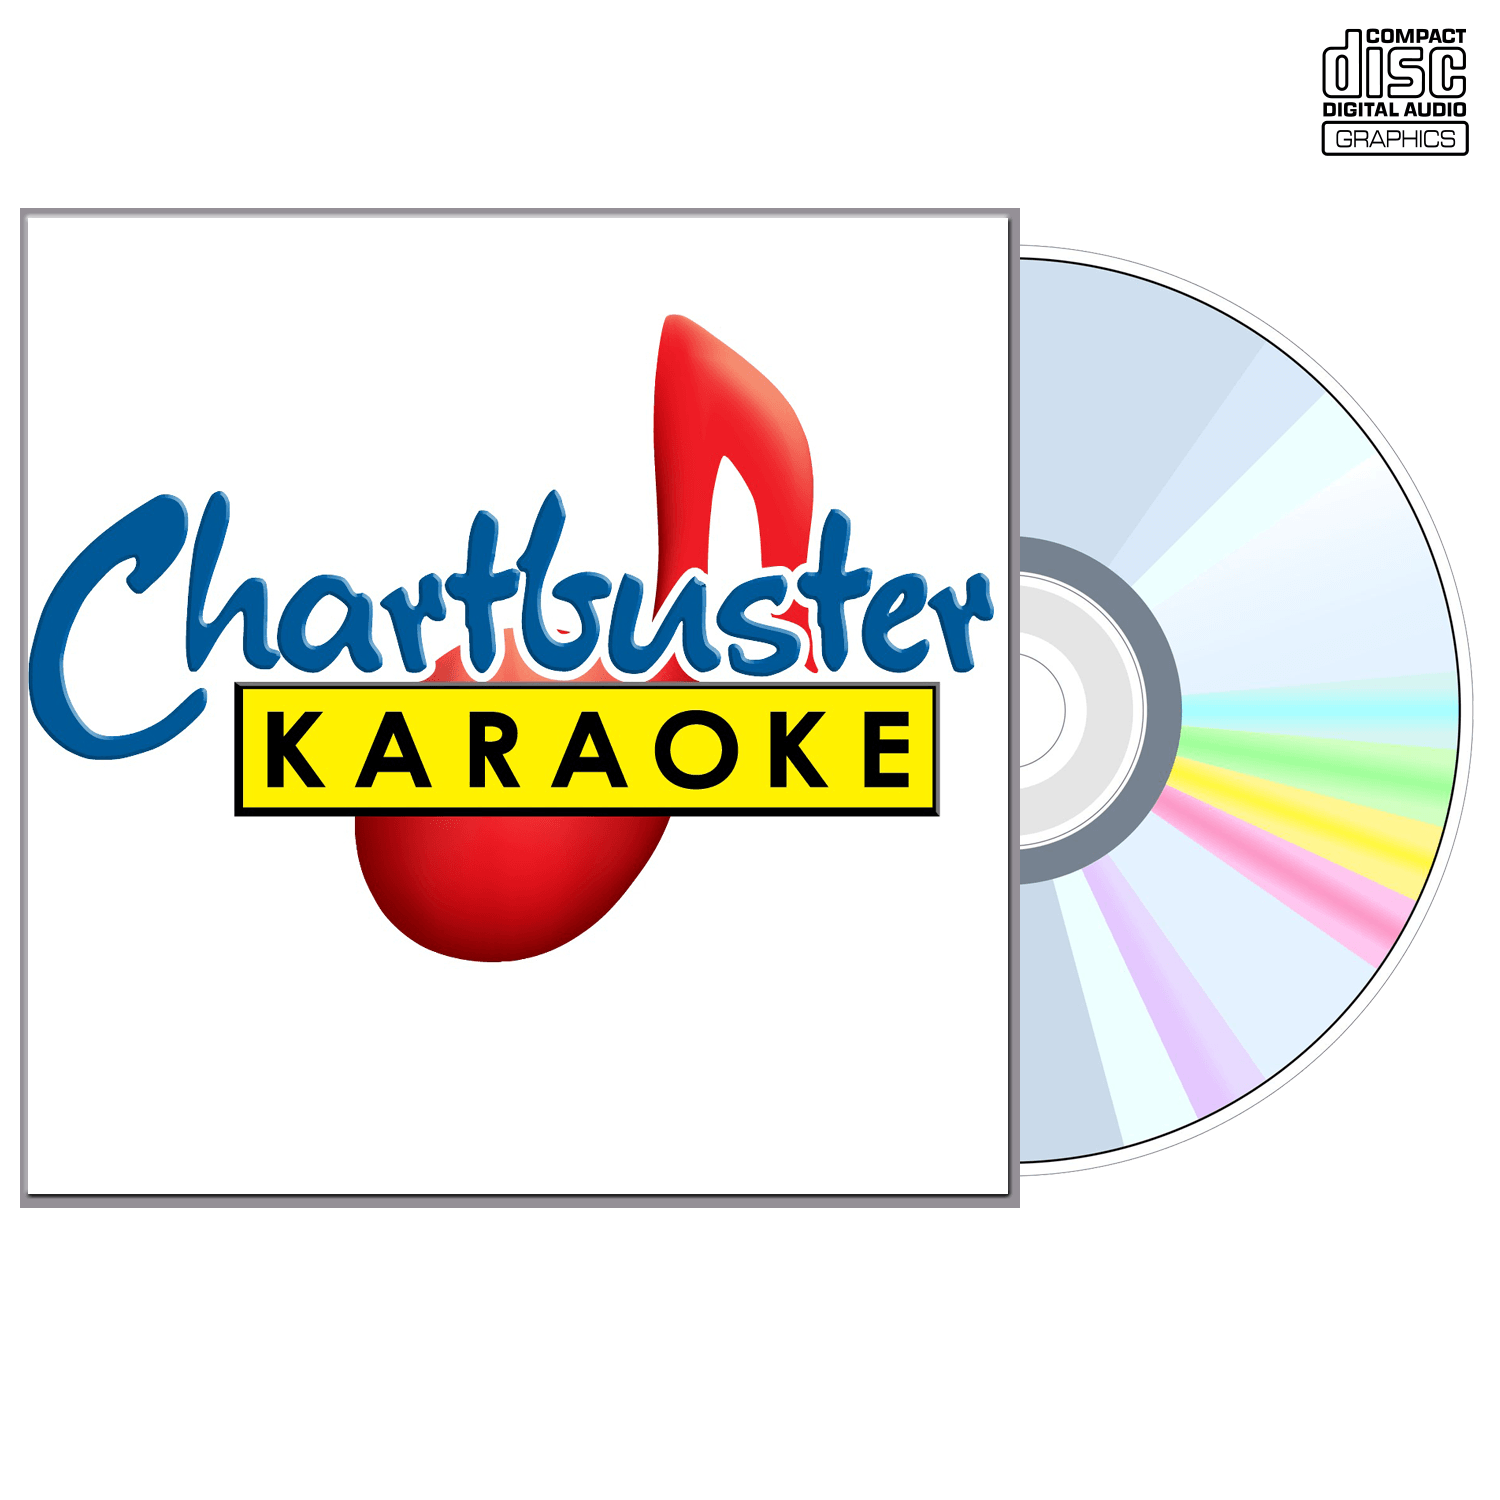 Tg Sheppard - CD+G - Chartbuster Karaoke - Karaoke Home Entertainment